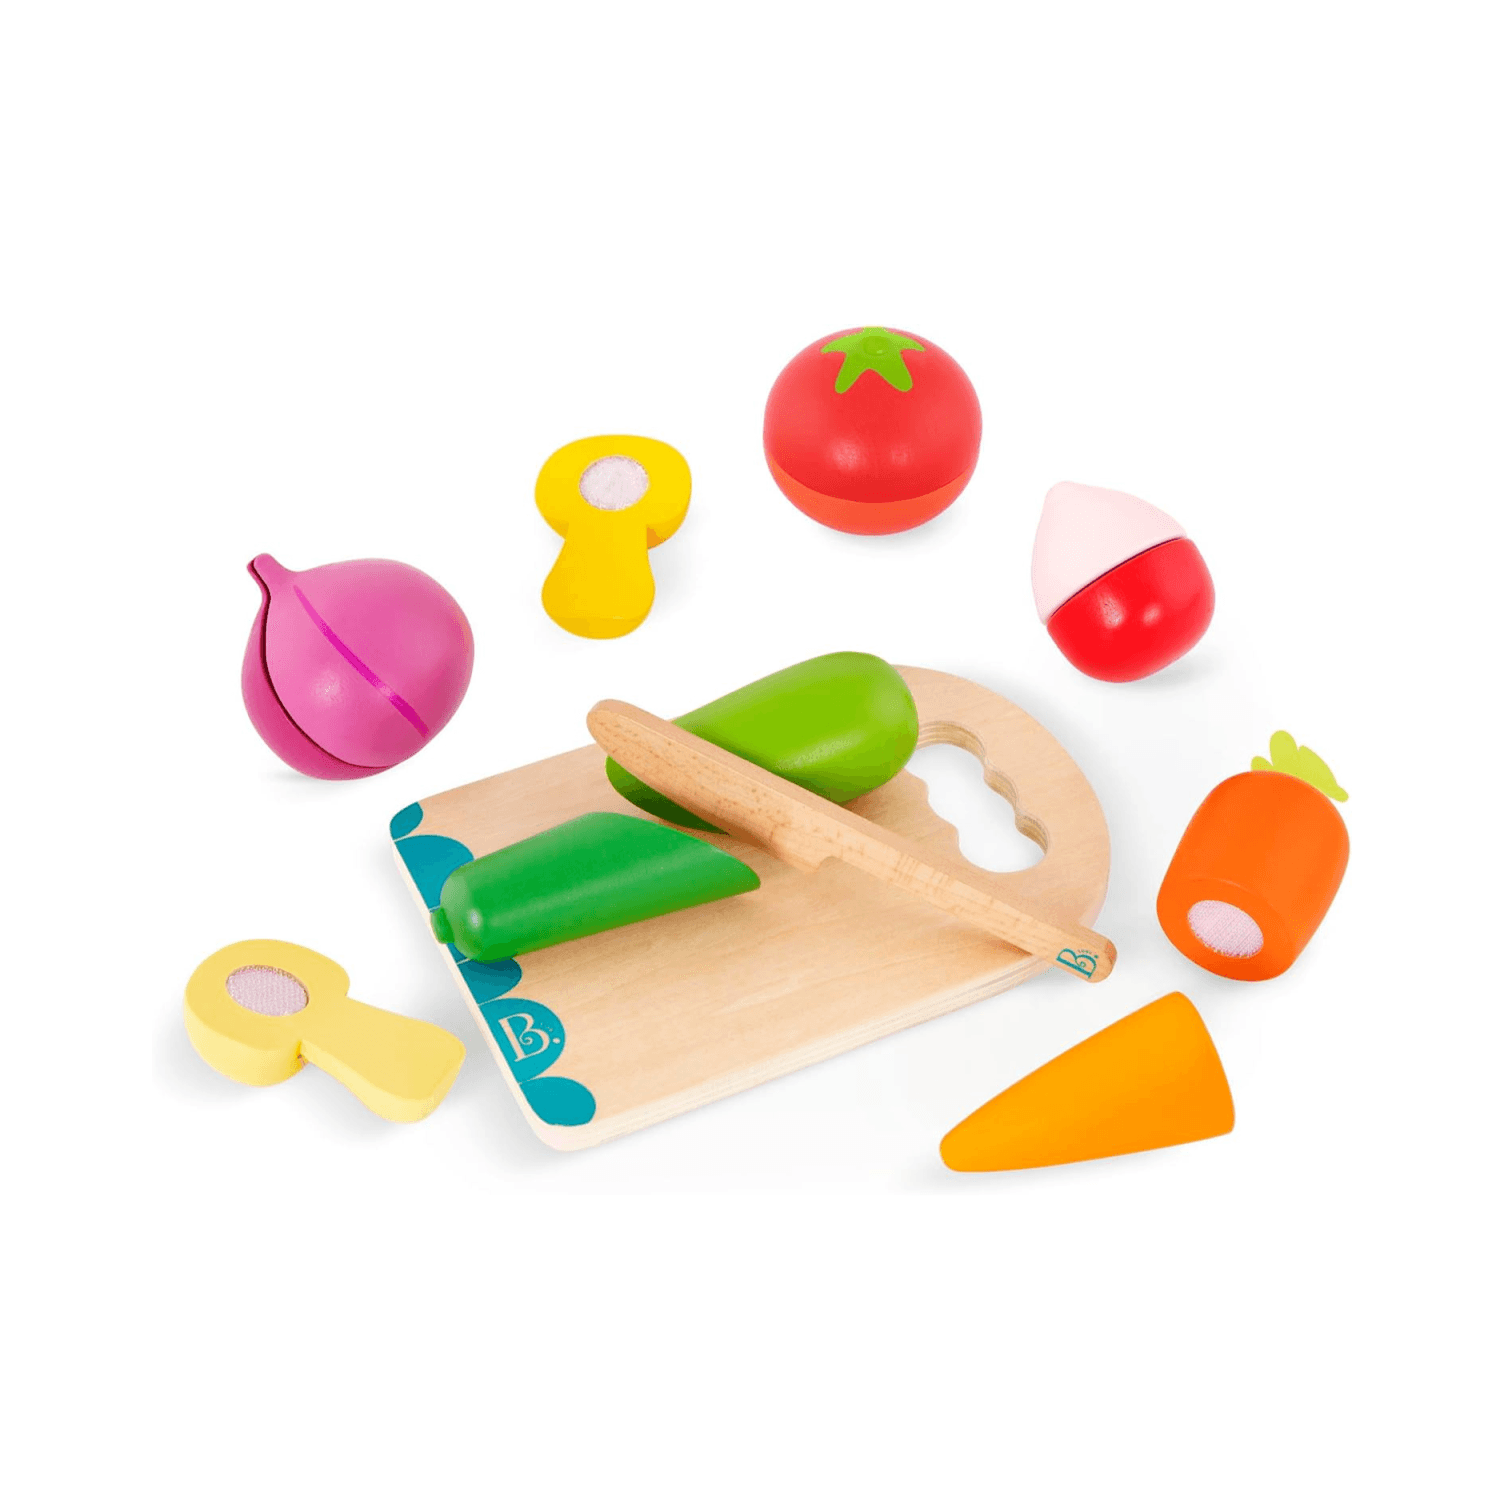 Montessori b toys vegetable cutting